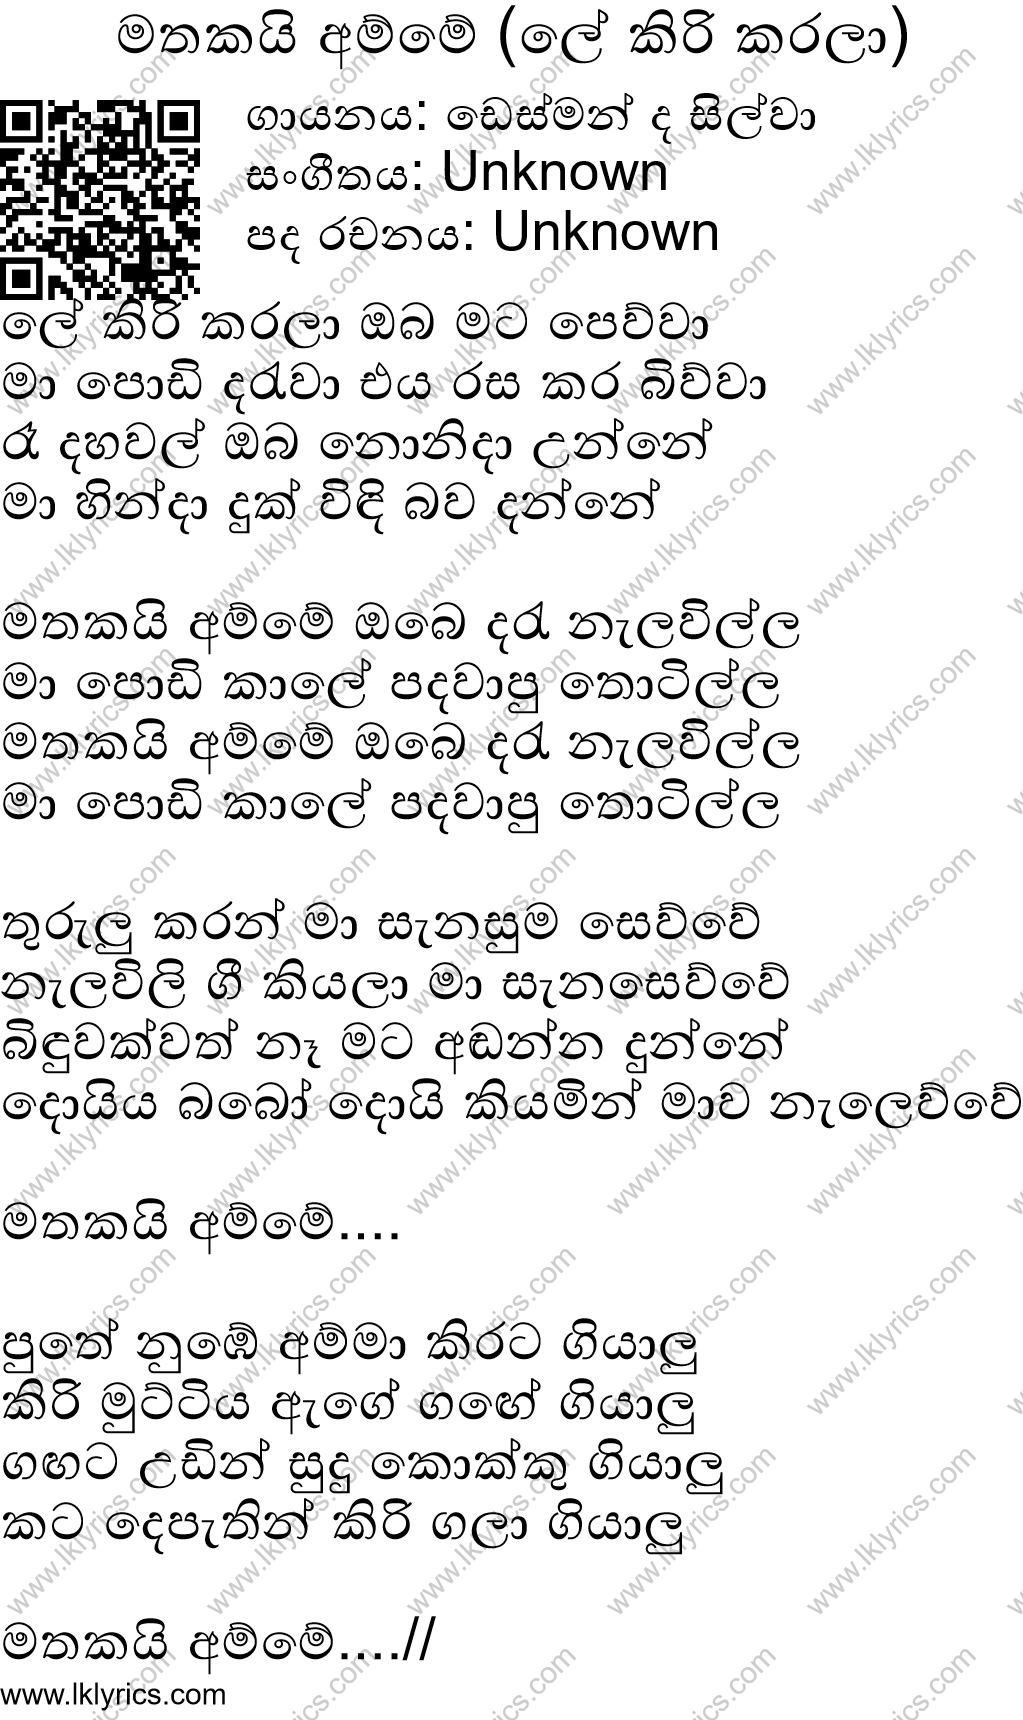 Le Kirikarala Mathakai Amme Lyrics